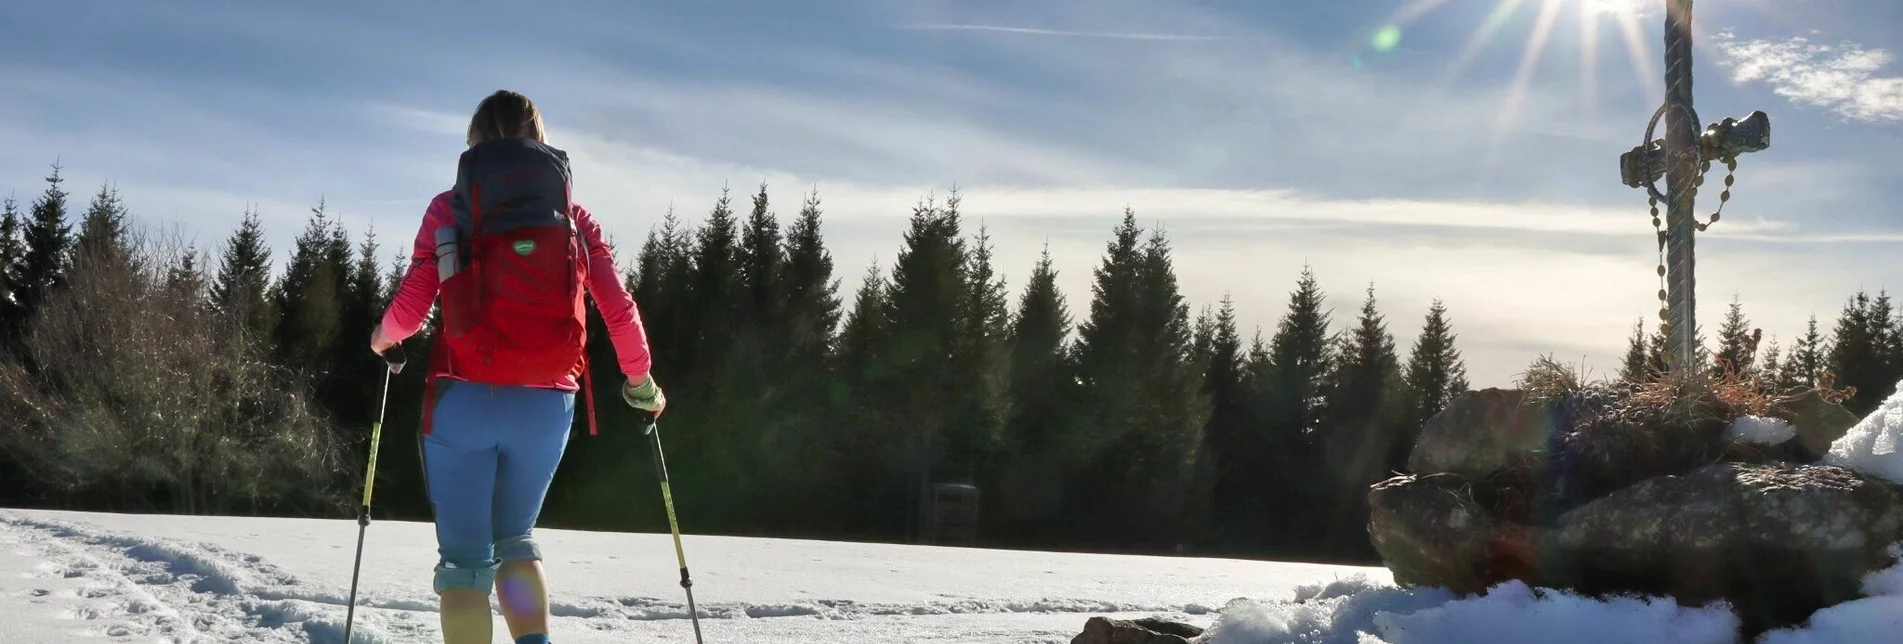 Snowshoe walking Schneeschuhwanderung Dreieckkogel - Touren-Impression #1 | © Weges OG